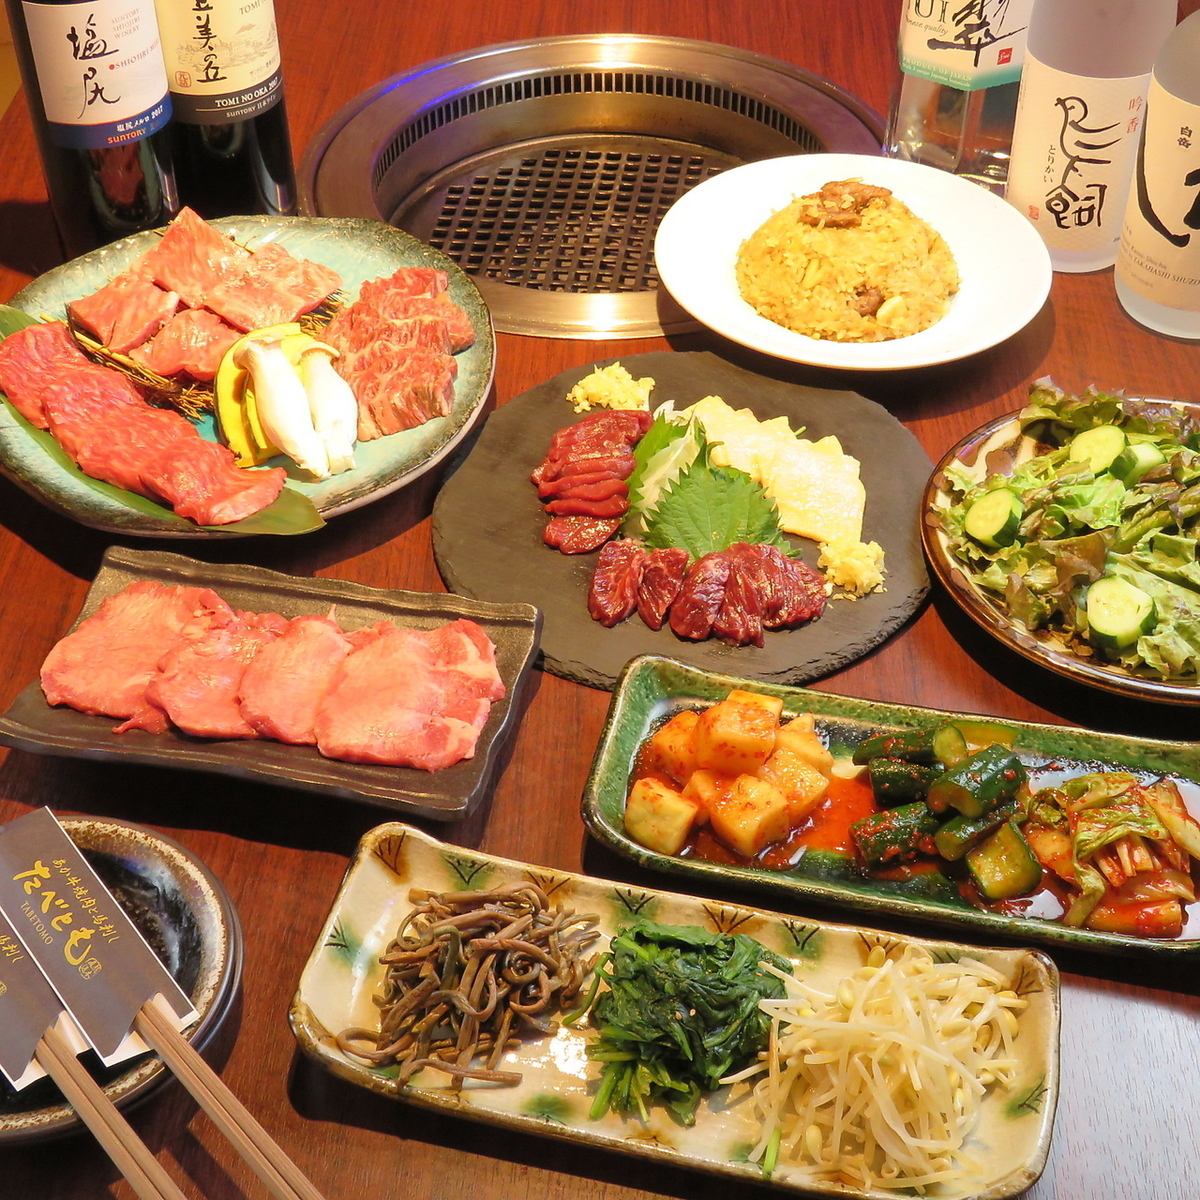 An anniversary course where you can enjoy the finest Kumamoto beef yakiniku and horse sashimi!